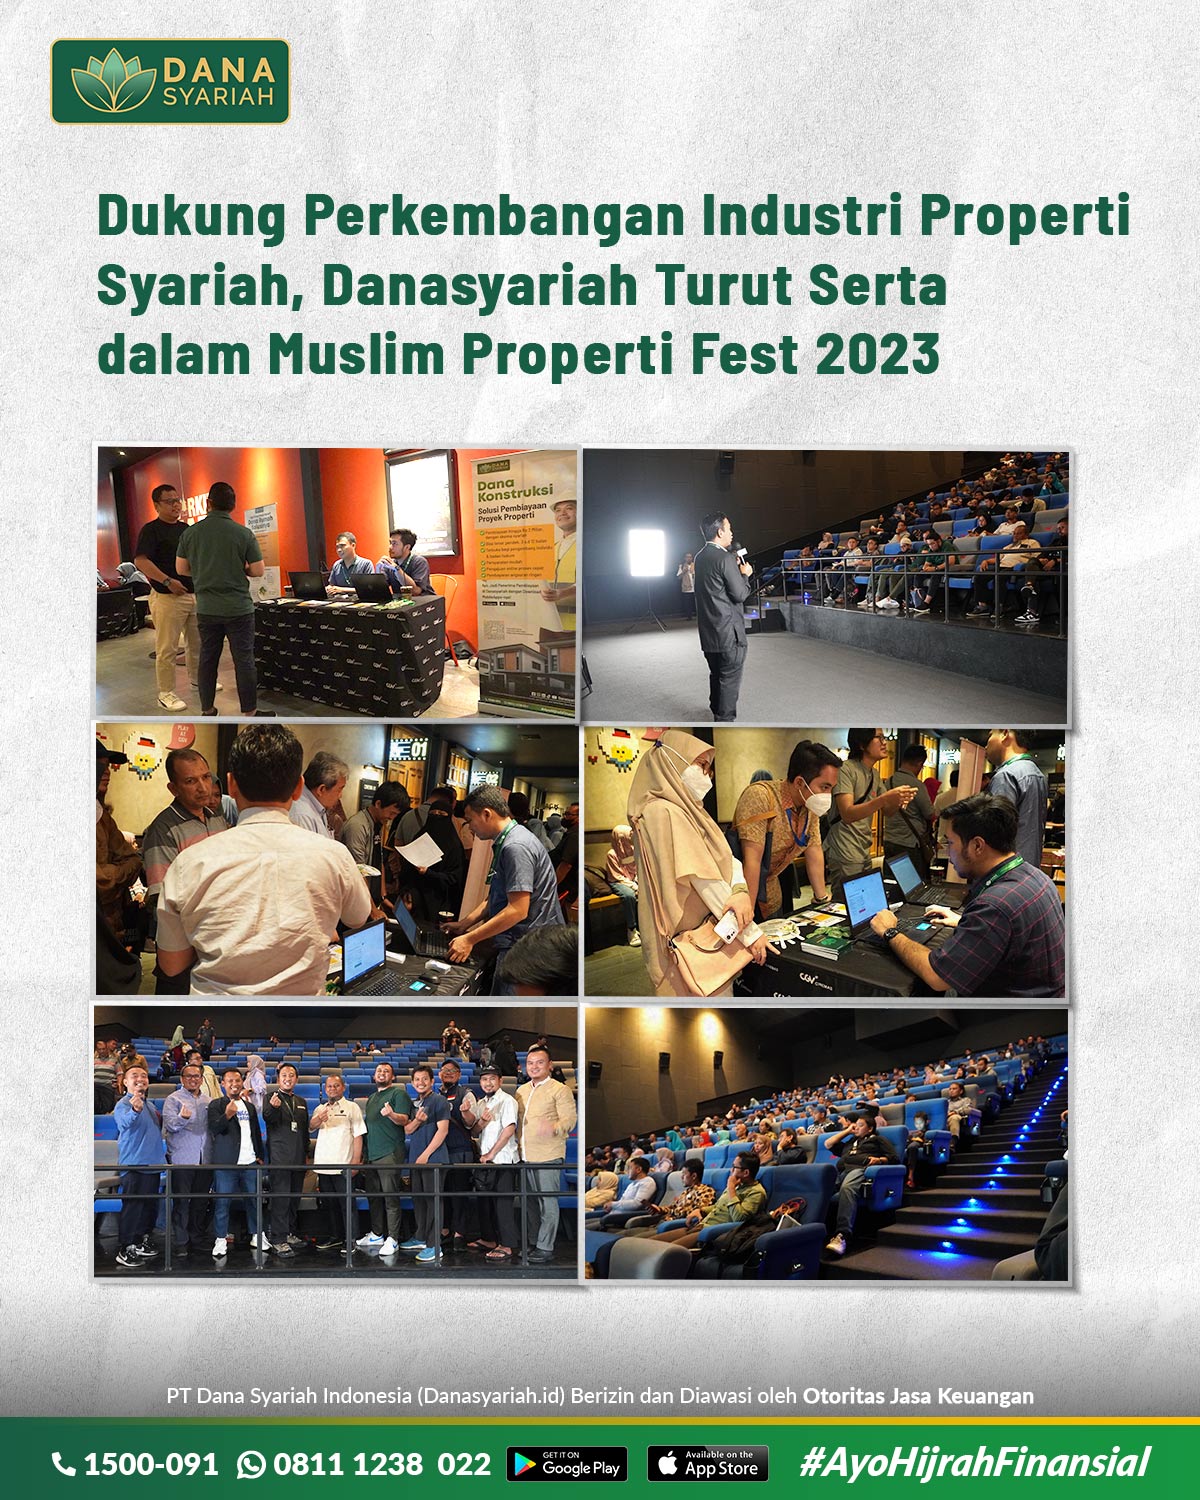 Dana Syariah Dukung Perkembangan Industri Properti Syariah, Danasyariah Turut Serta dalam Muslim Properti Fest 2023